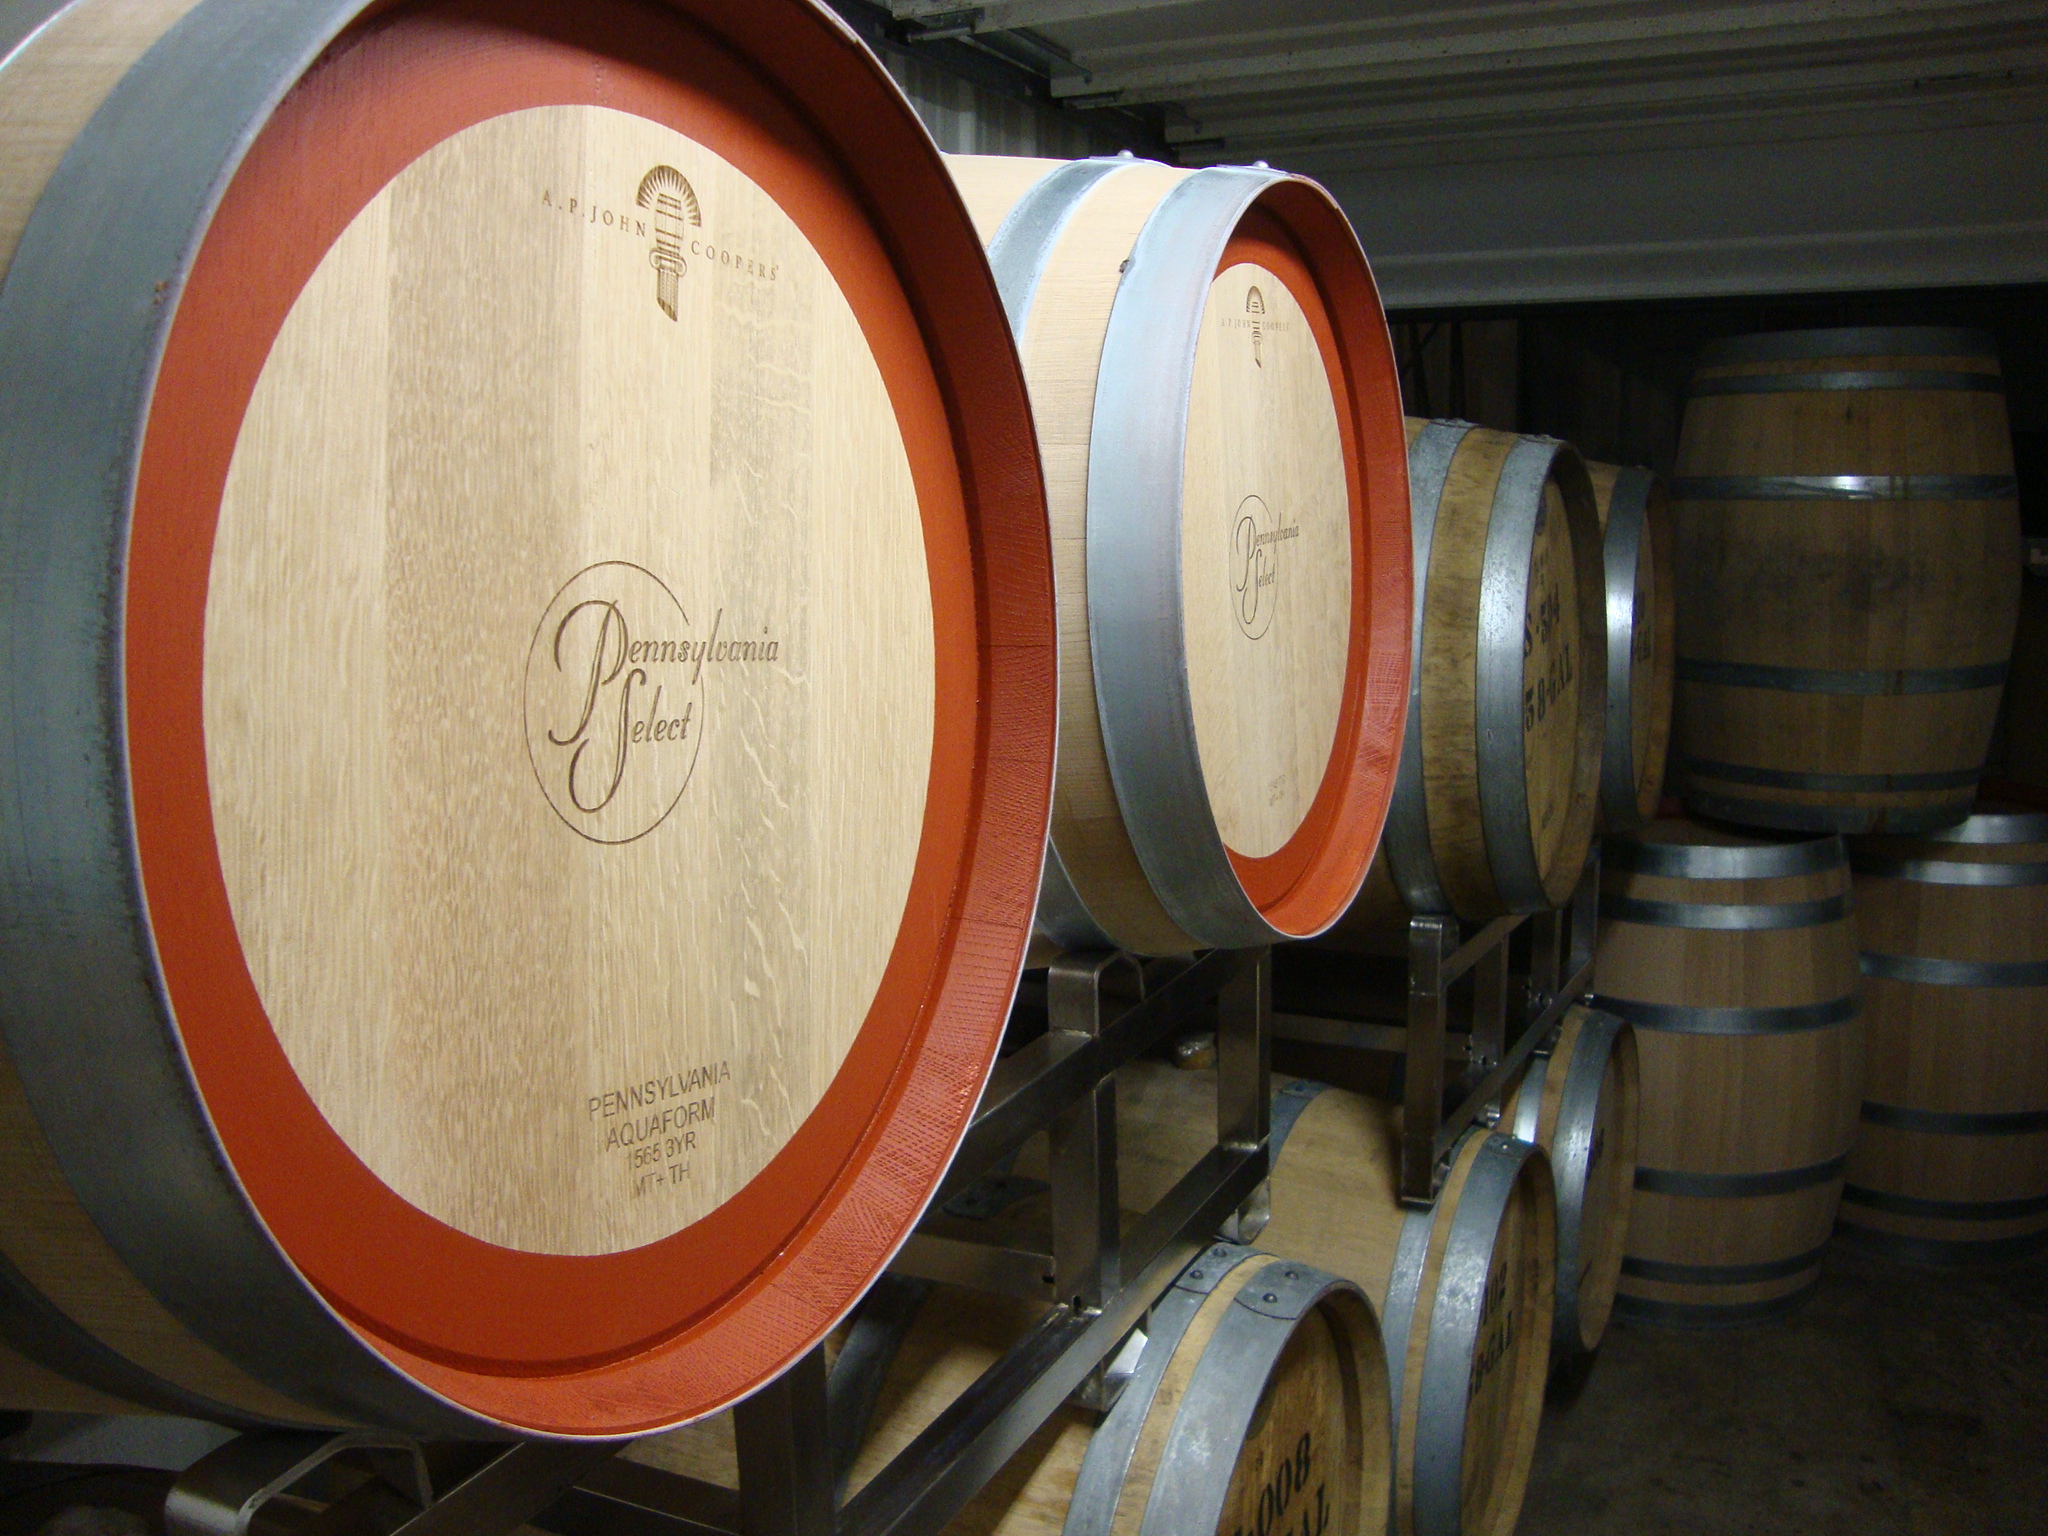 Conneaut Cellars Winery & Distillery’s wines aging in Pennsylvania Oak Barrels